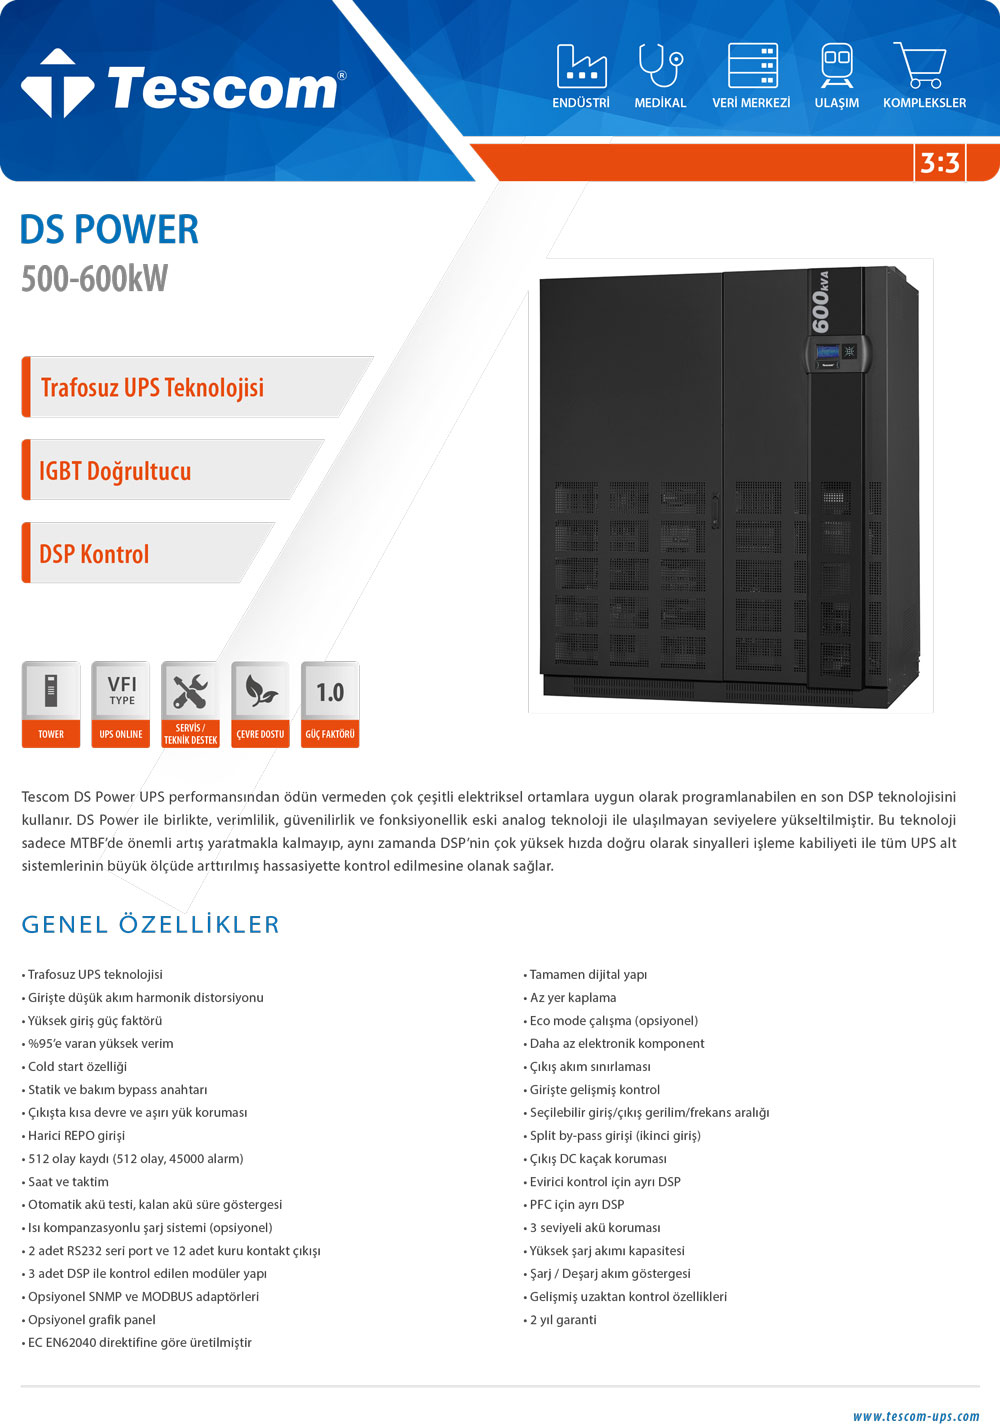 DS POWER 500 - 600 kW